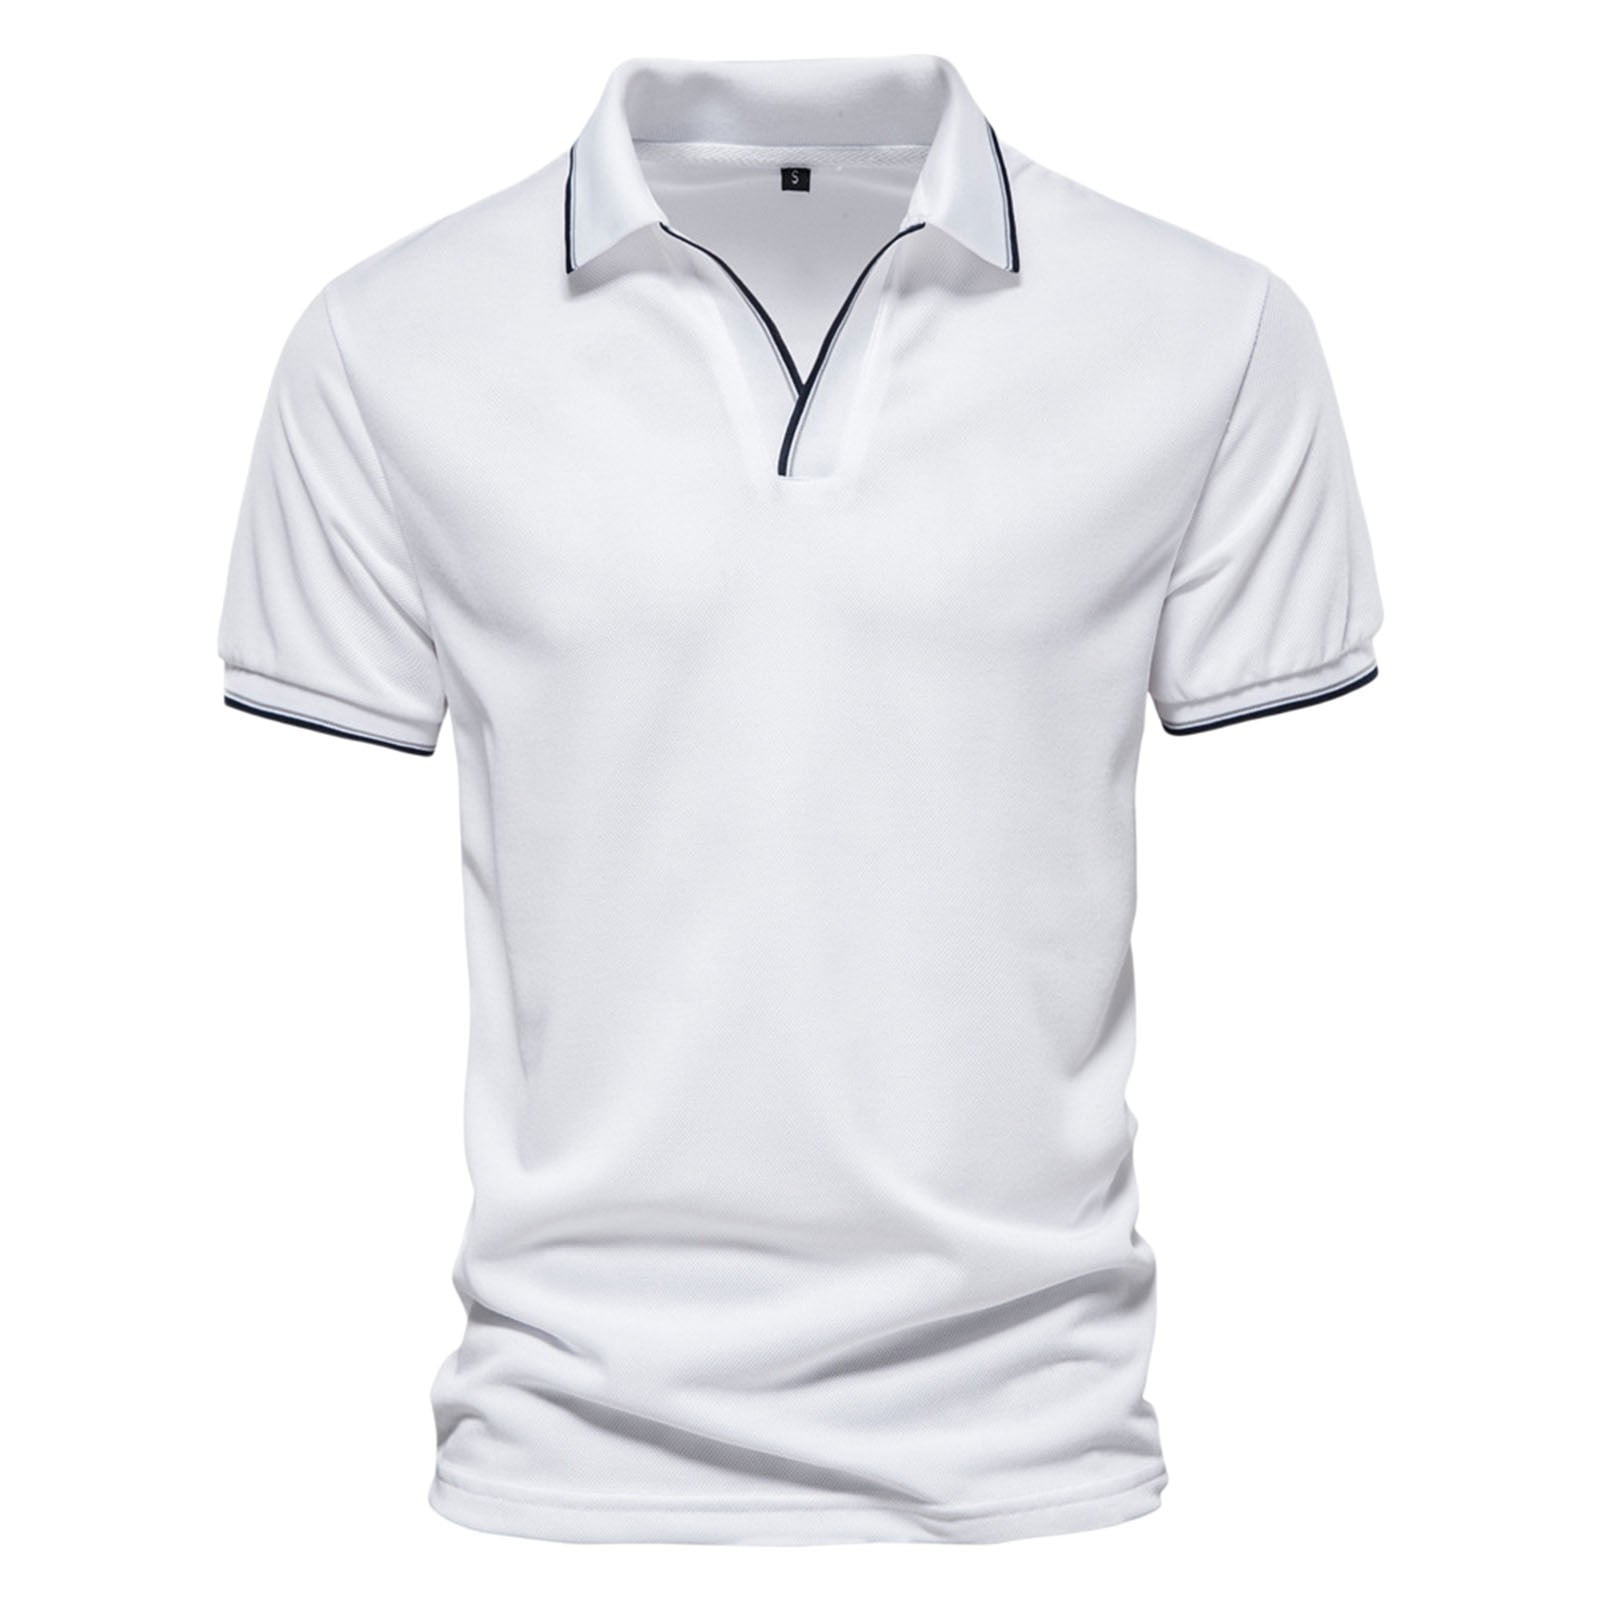 Golf Shirts for Men Polo Shirt Fashion Casual Solid Color Cotton V Neck Button Short Sleeve T Shirt Top Casual T-Shirt - Walmart.com